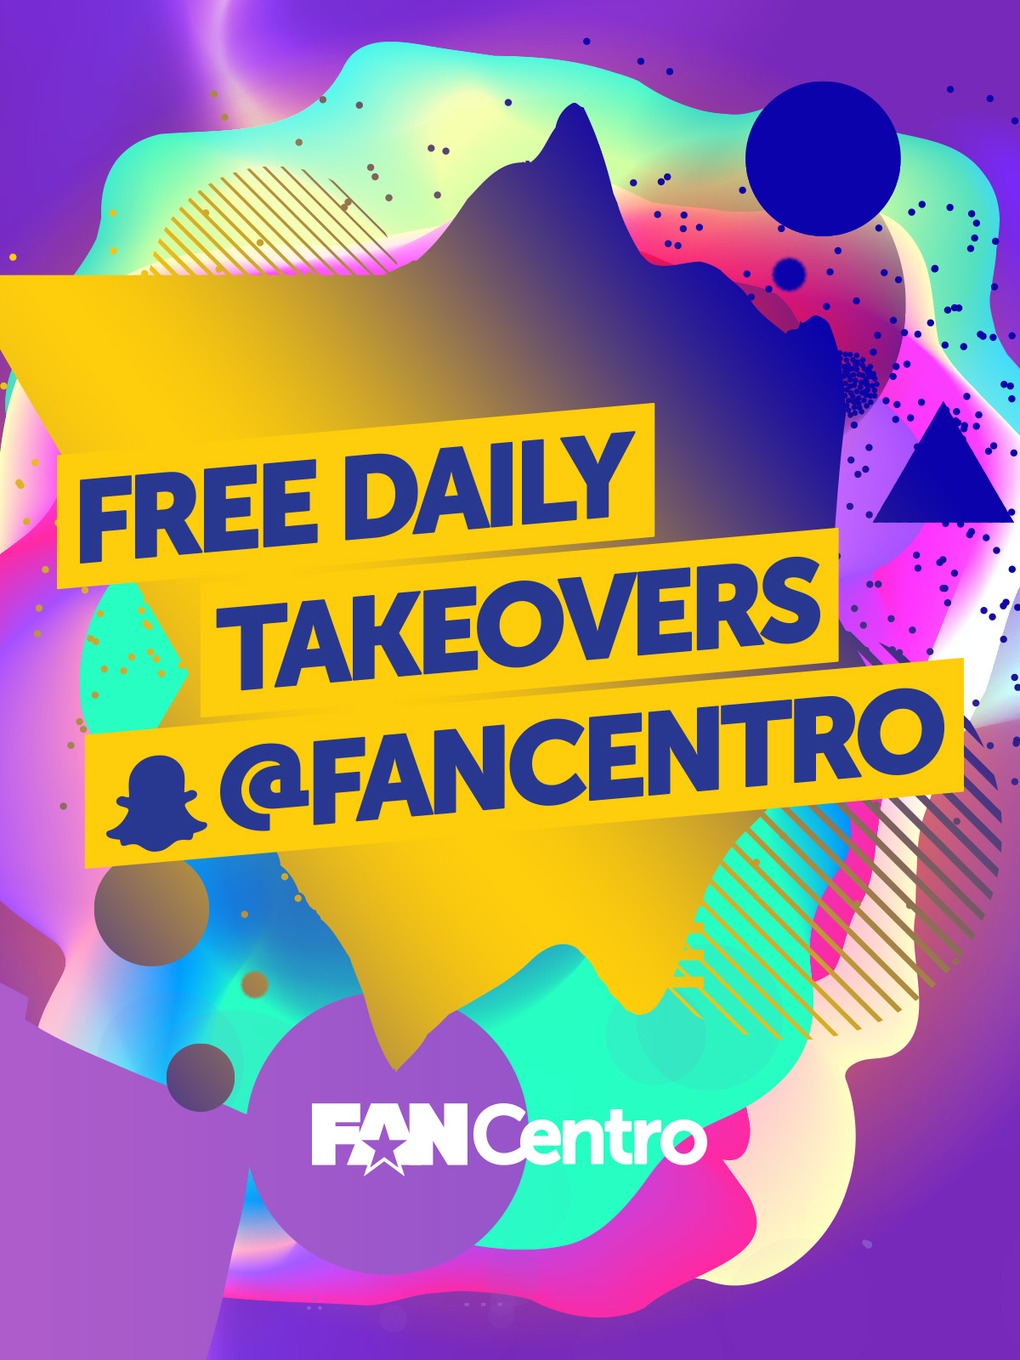 Fancentro Private Stories Exclusive Videos Private Messaging Fancentro